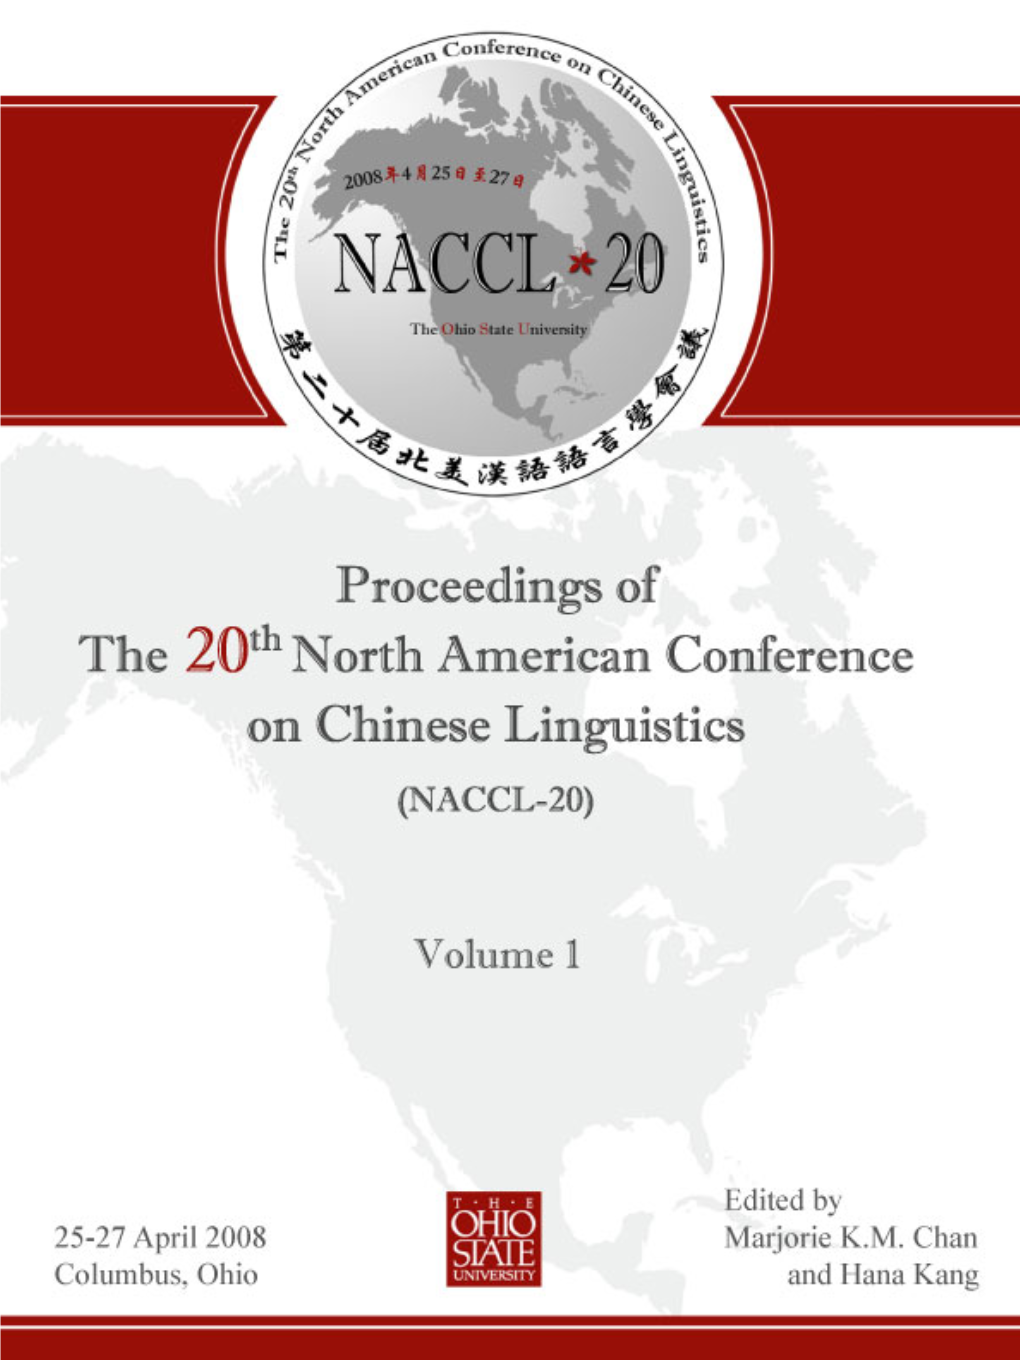 NACCL-20 Proceedings Volume 1